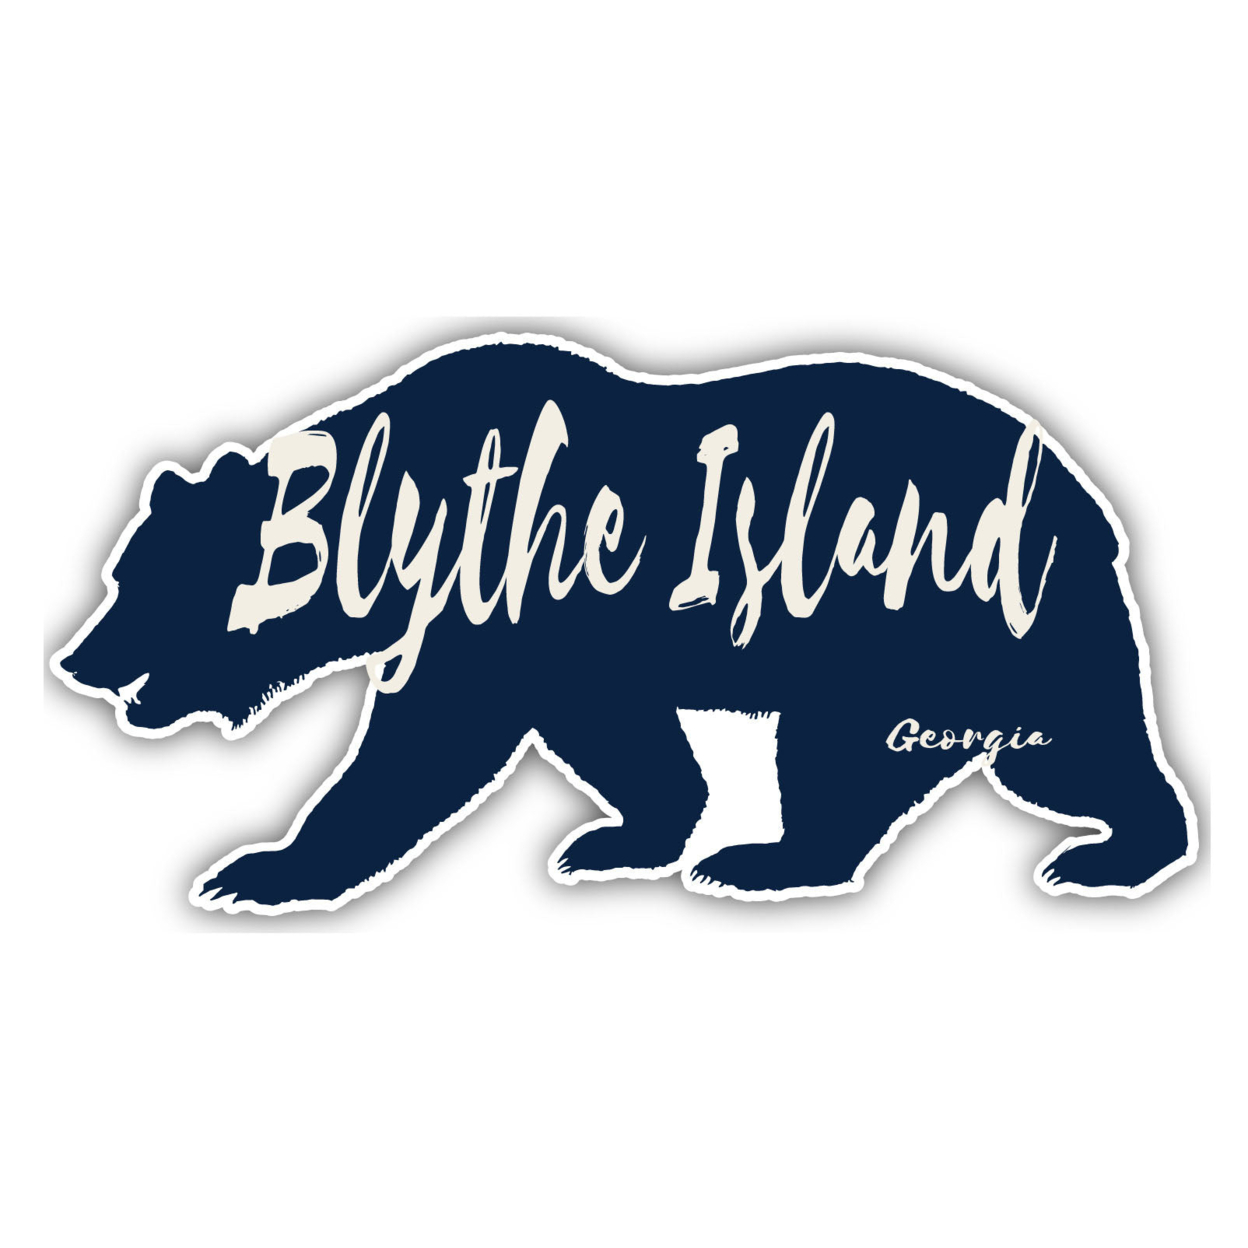 Blythe Island Georgia Souvenir Decorative Stickers (Choose Theme And Size) - 4-Pack, 4-Inch, Camp Life